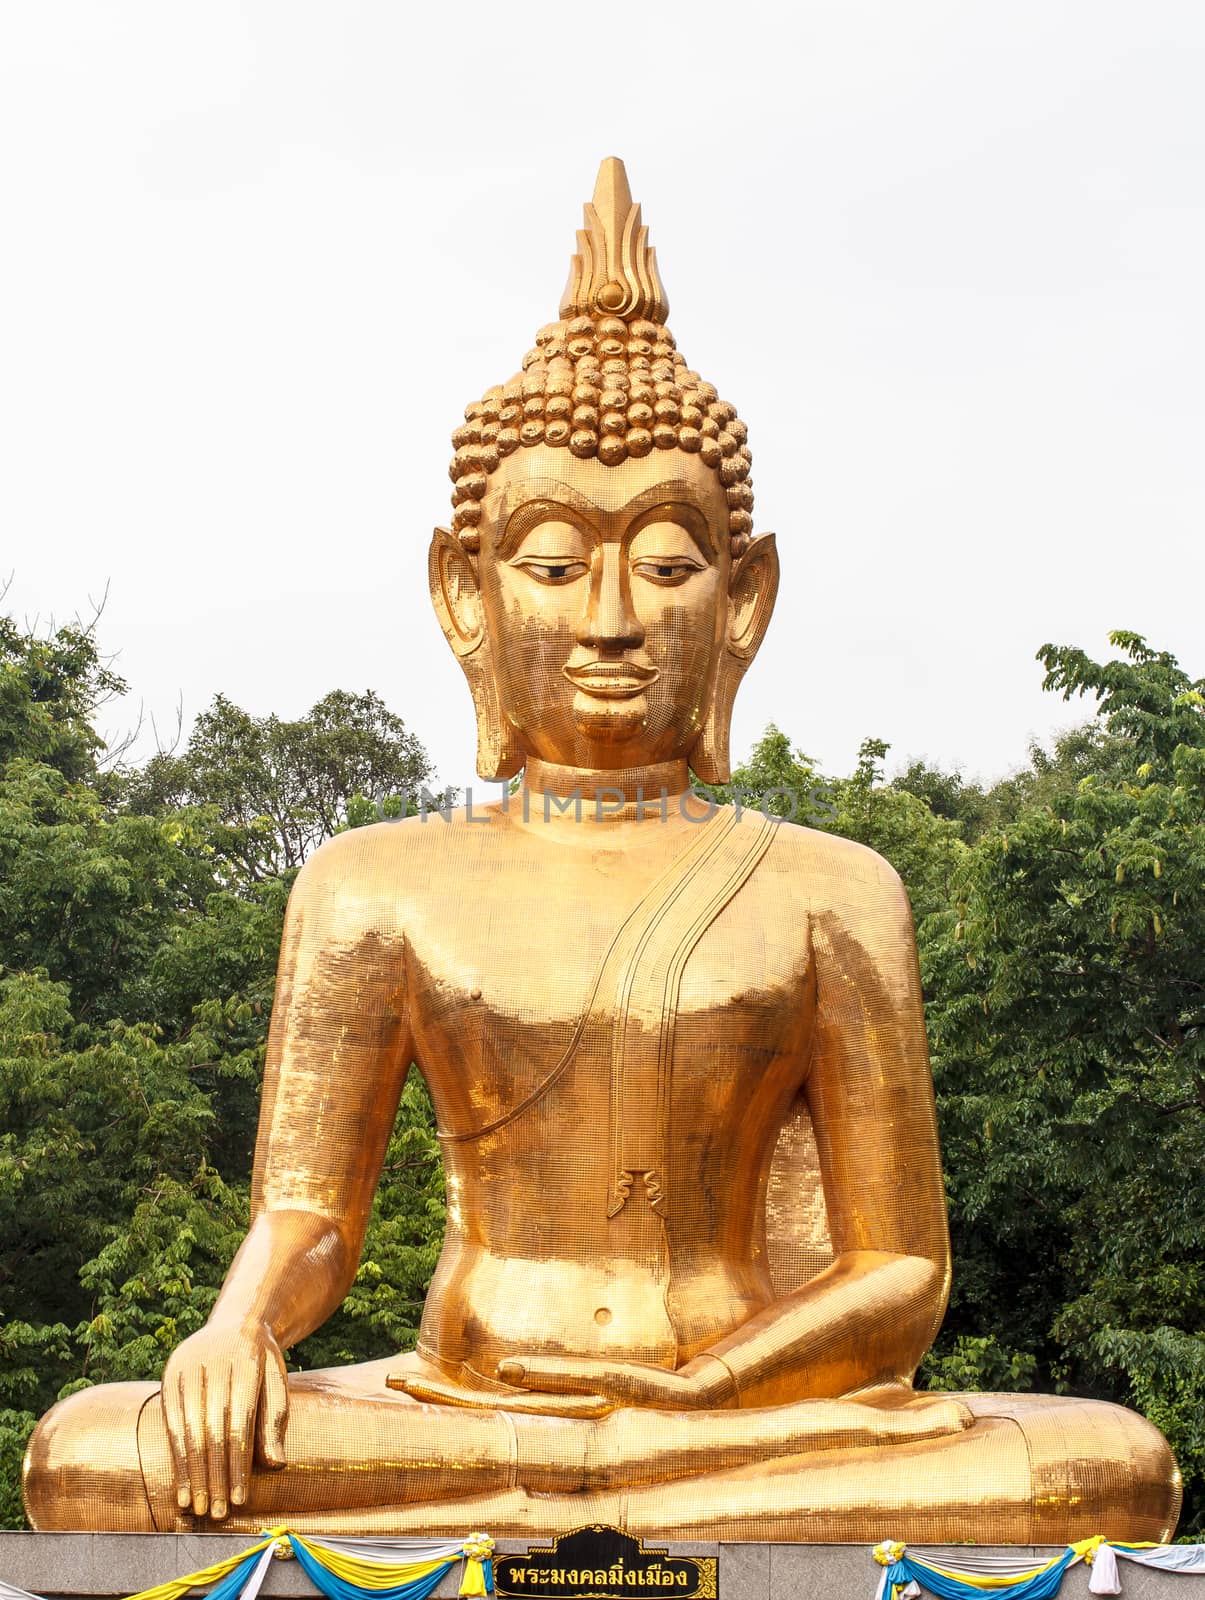 Golden Buddha by Praphan